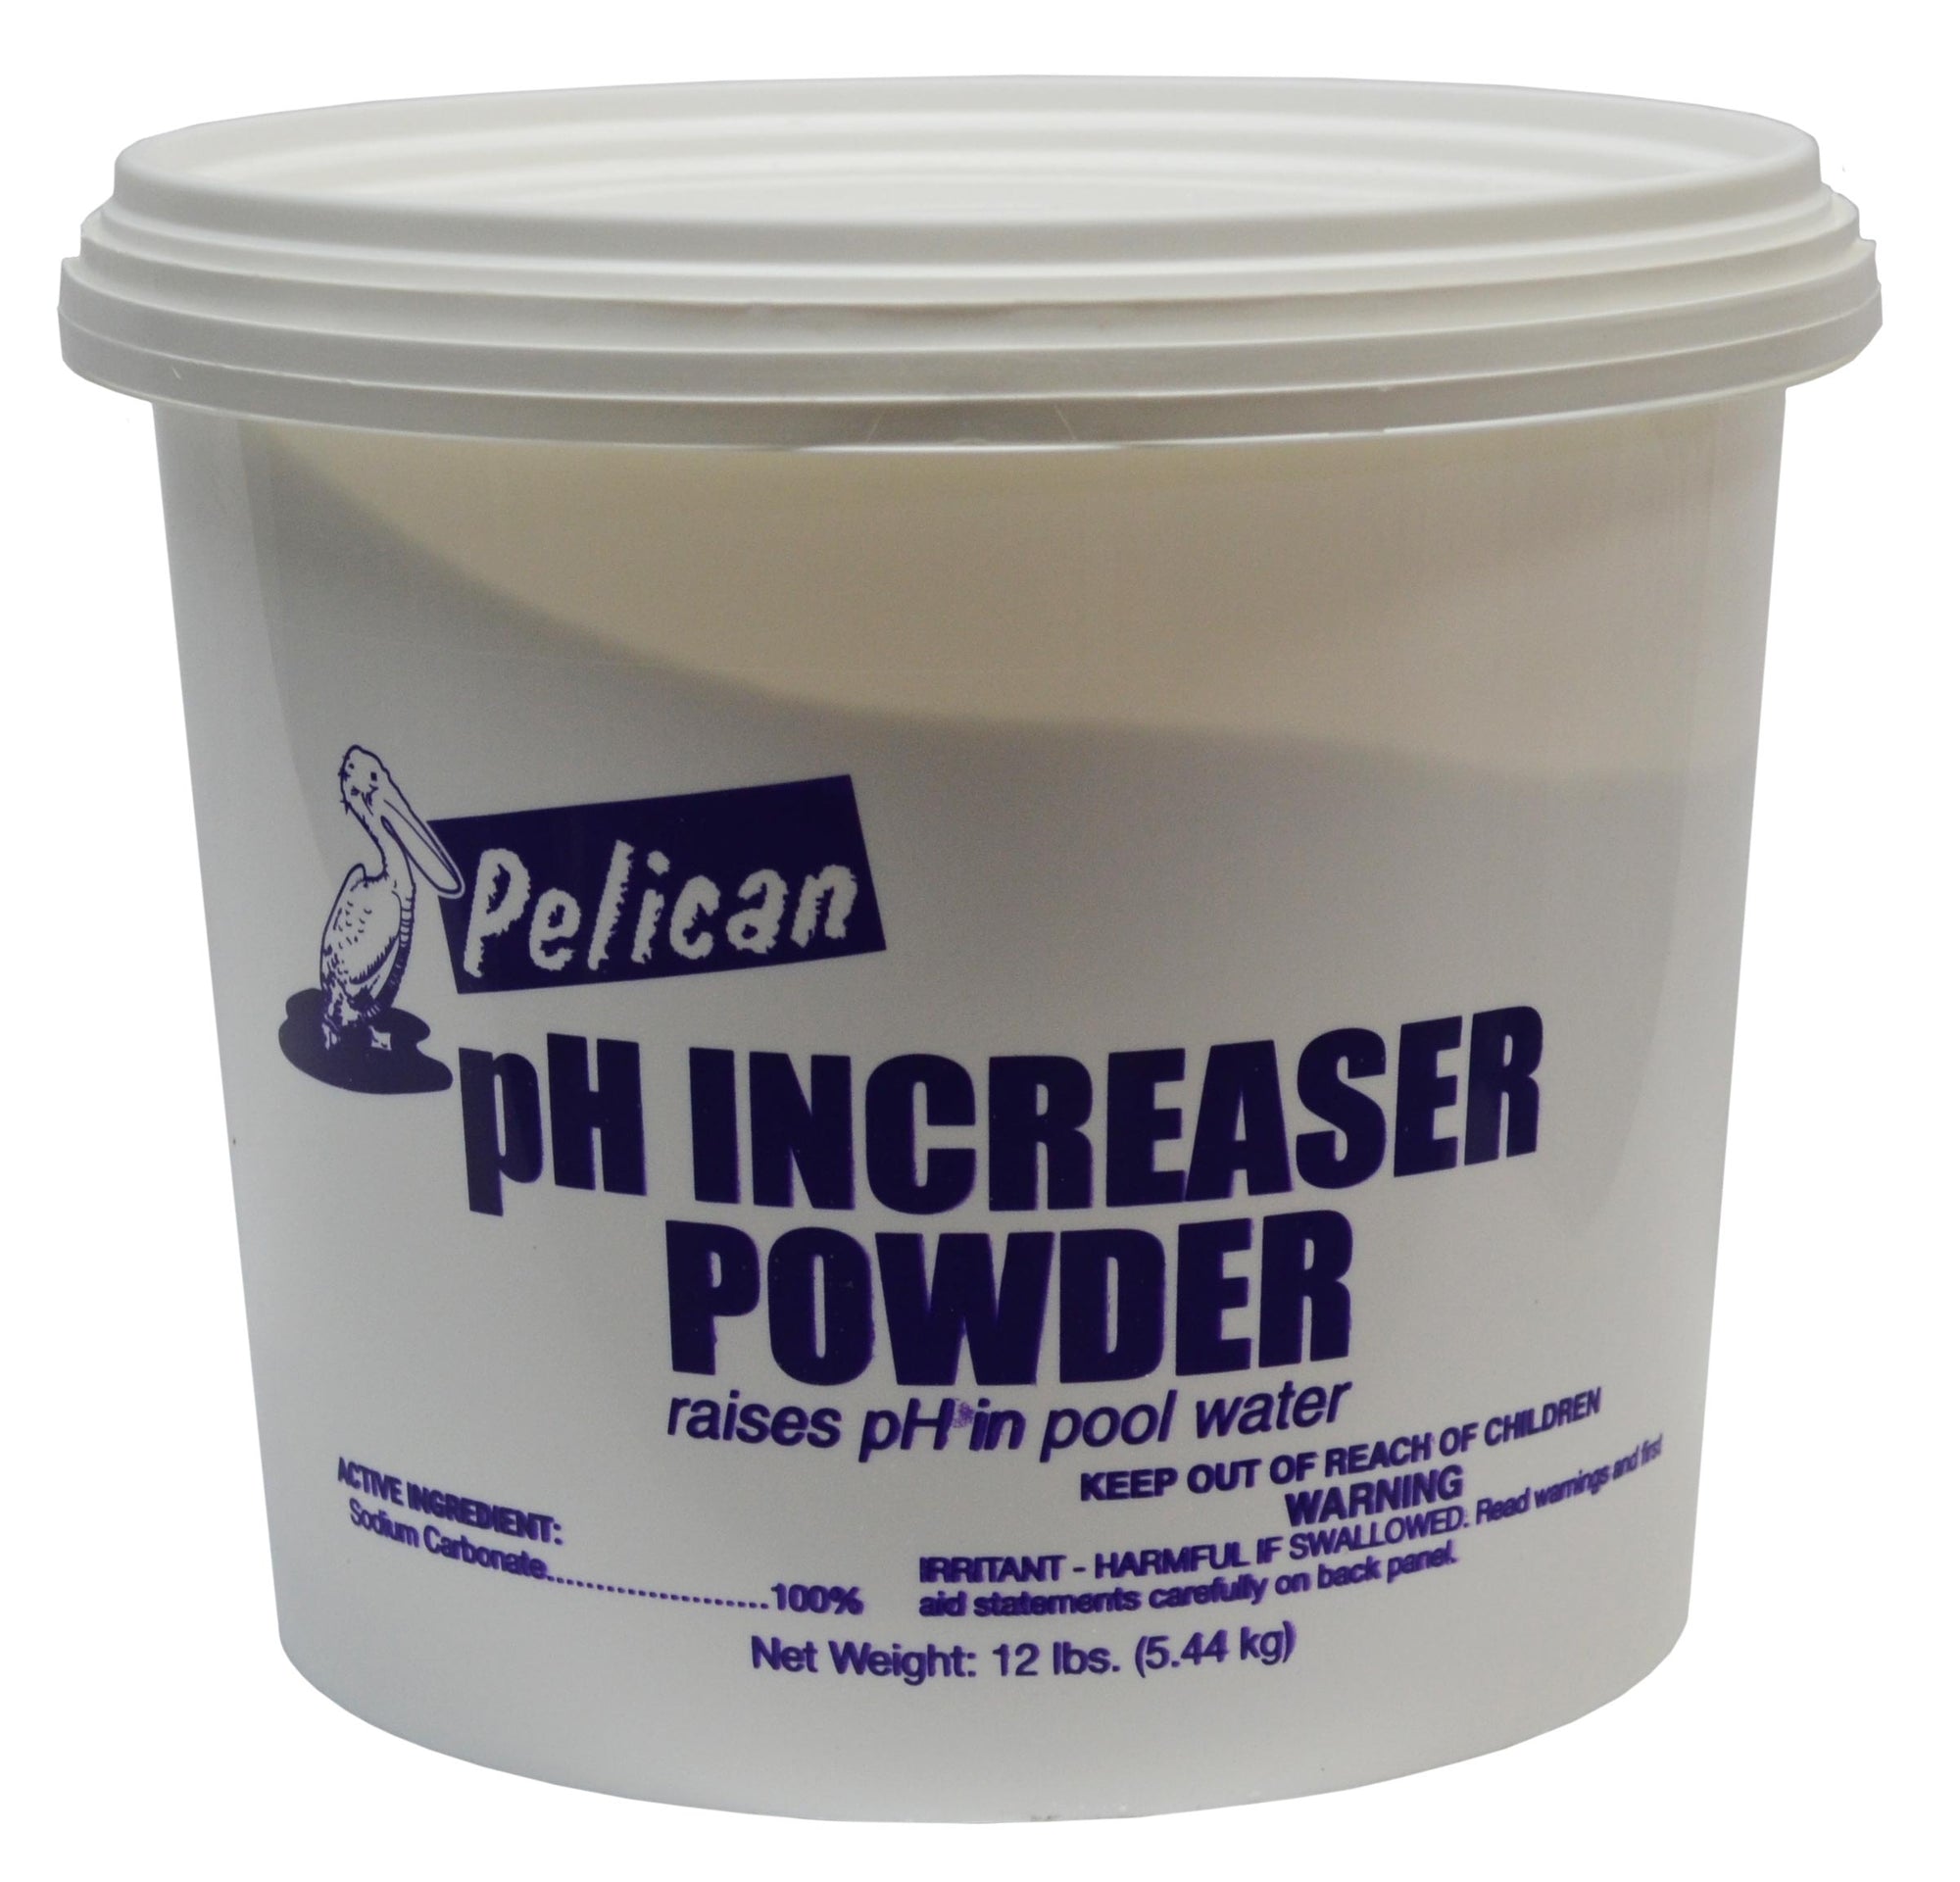 Pelican PH Increaser Powder 12lbs